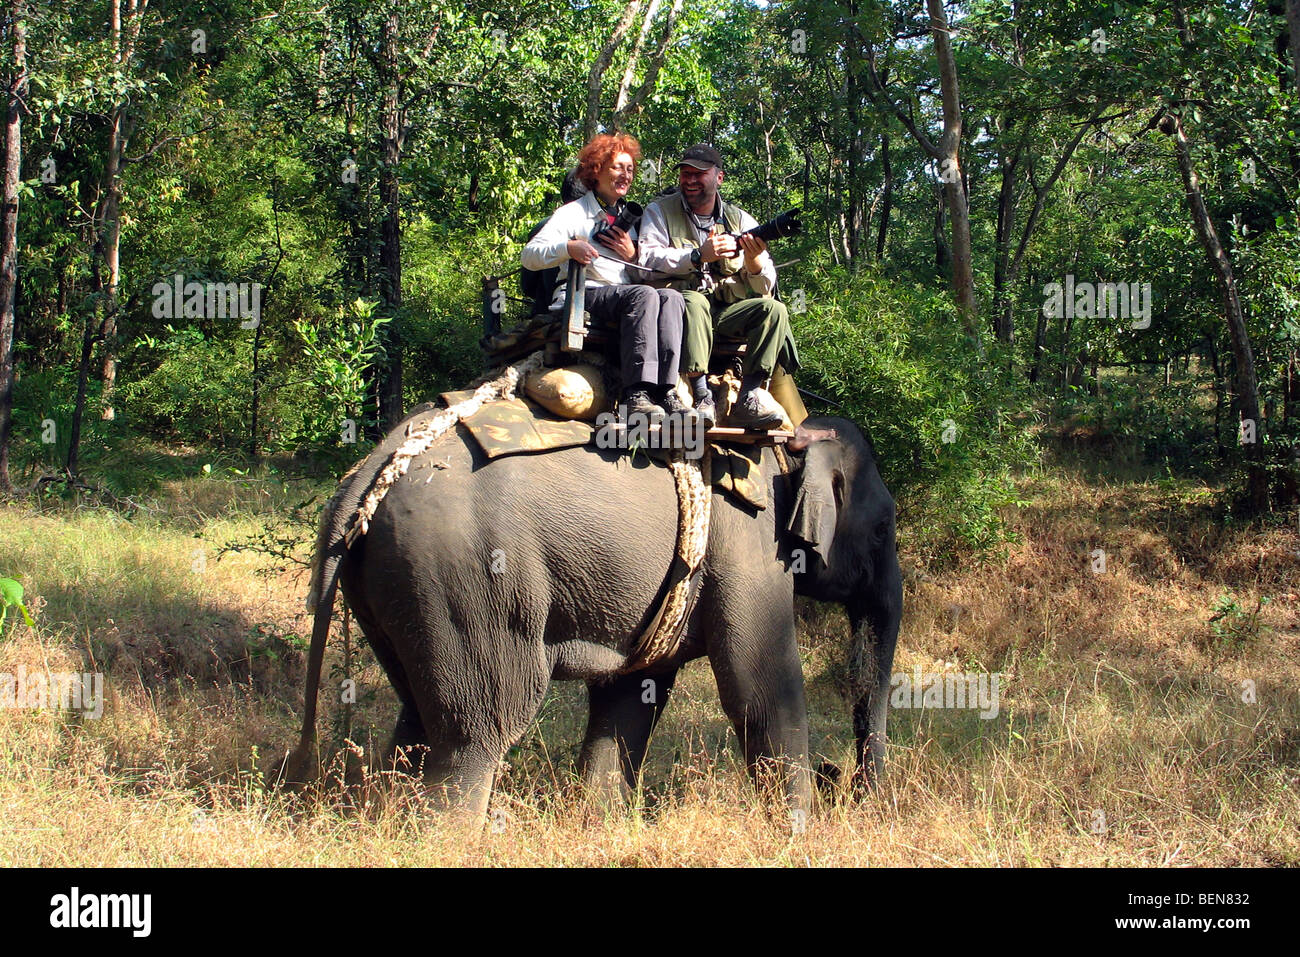 Tourists riding Indian elephant (Elephas maximus) during tiger safari, India Stock Photo